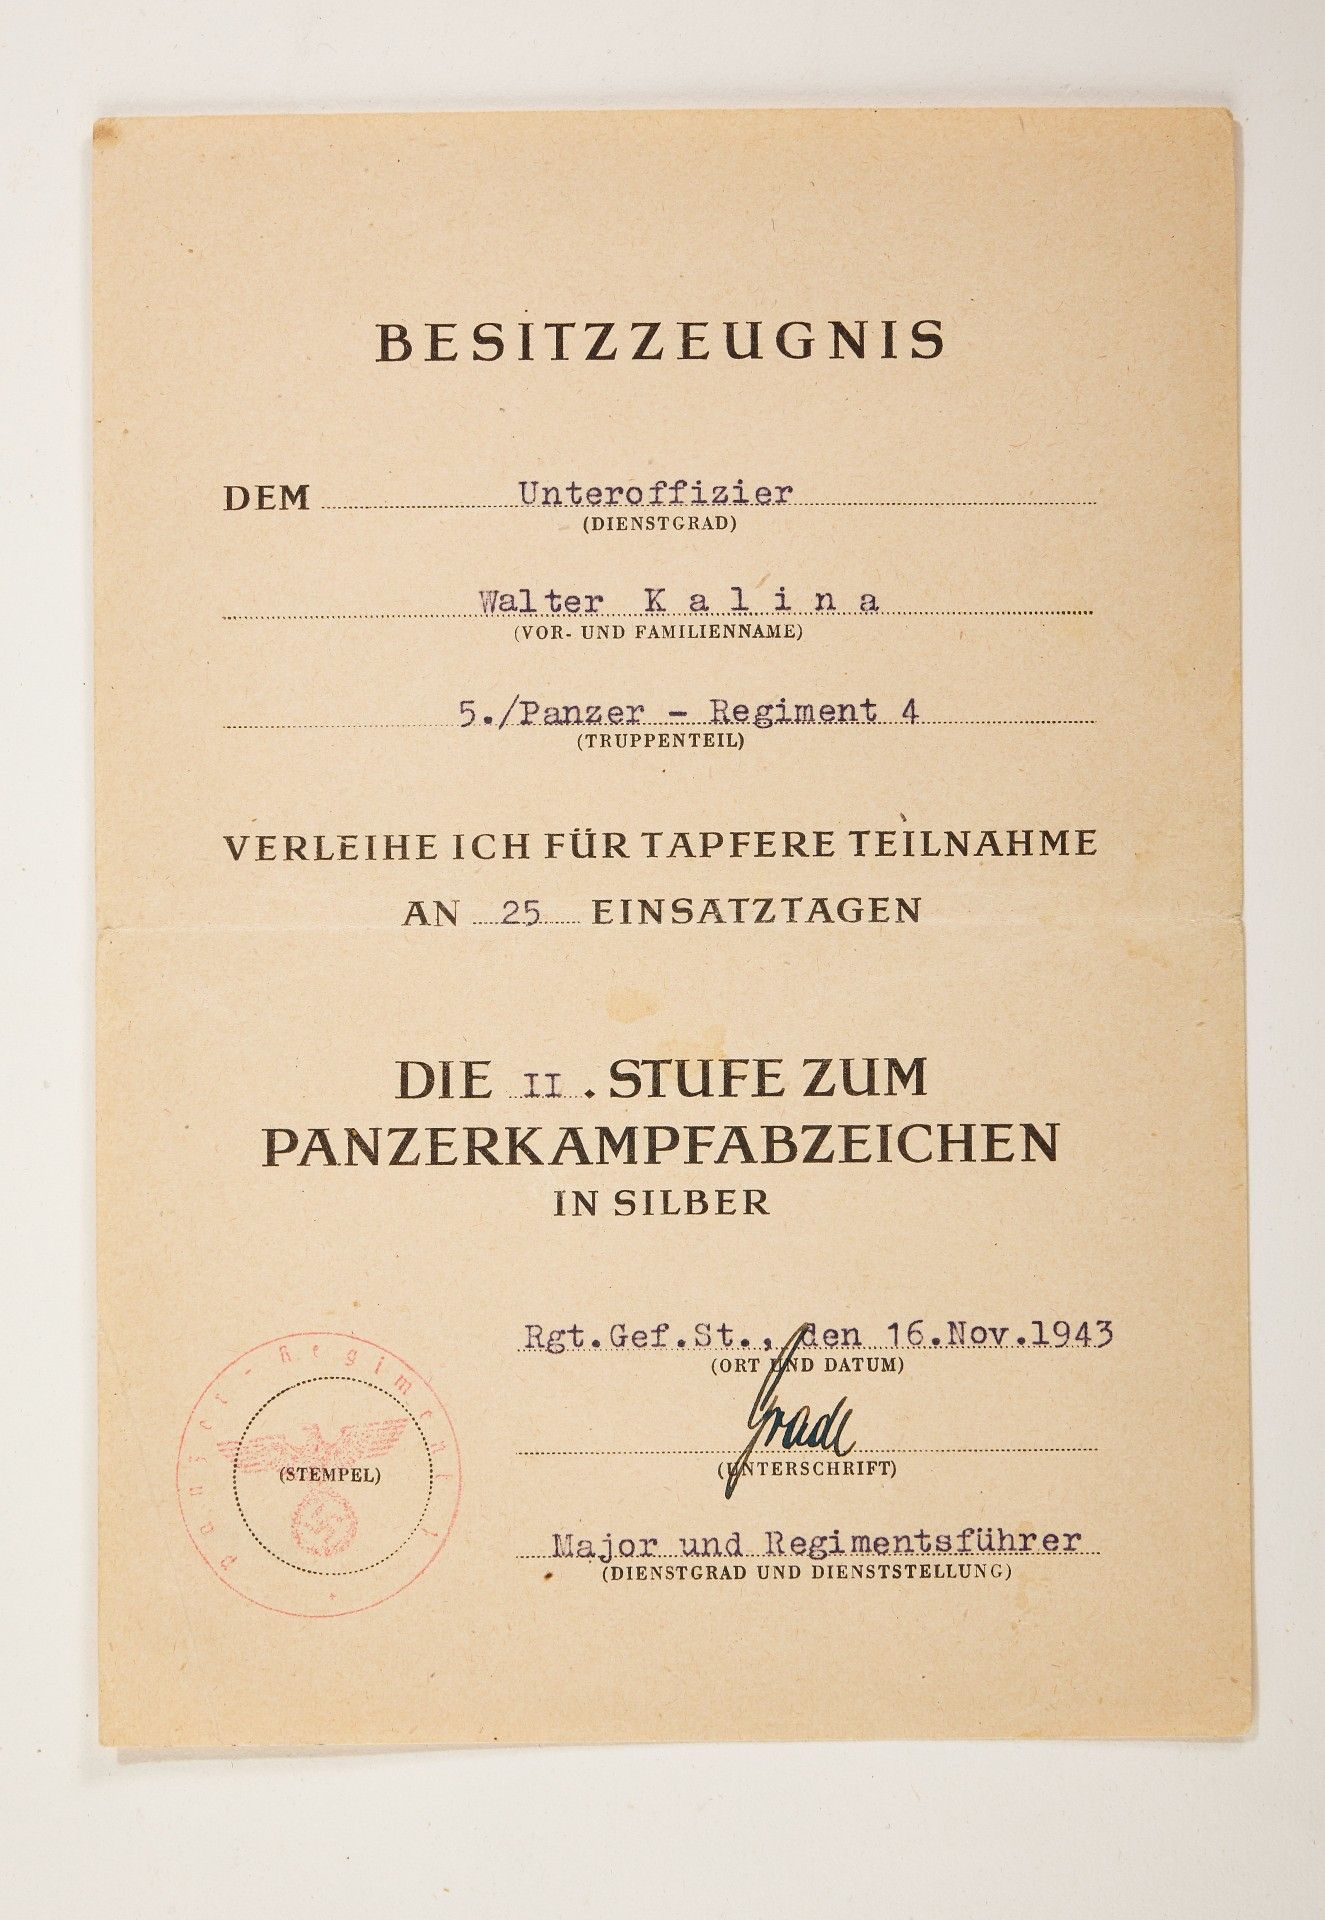 1933-1945: Dokumentennachlass des Unteroffiziers Walter Kalina, 8./Pz.Rgt.4